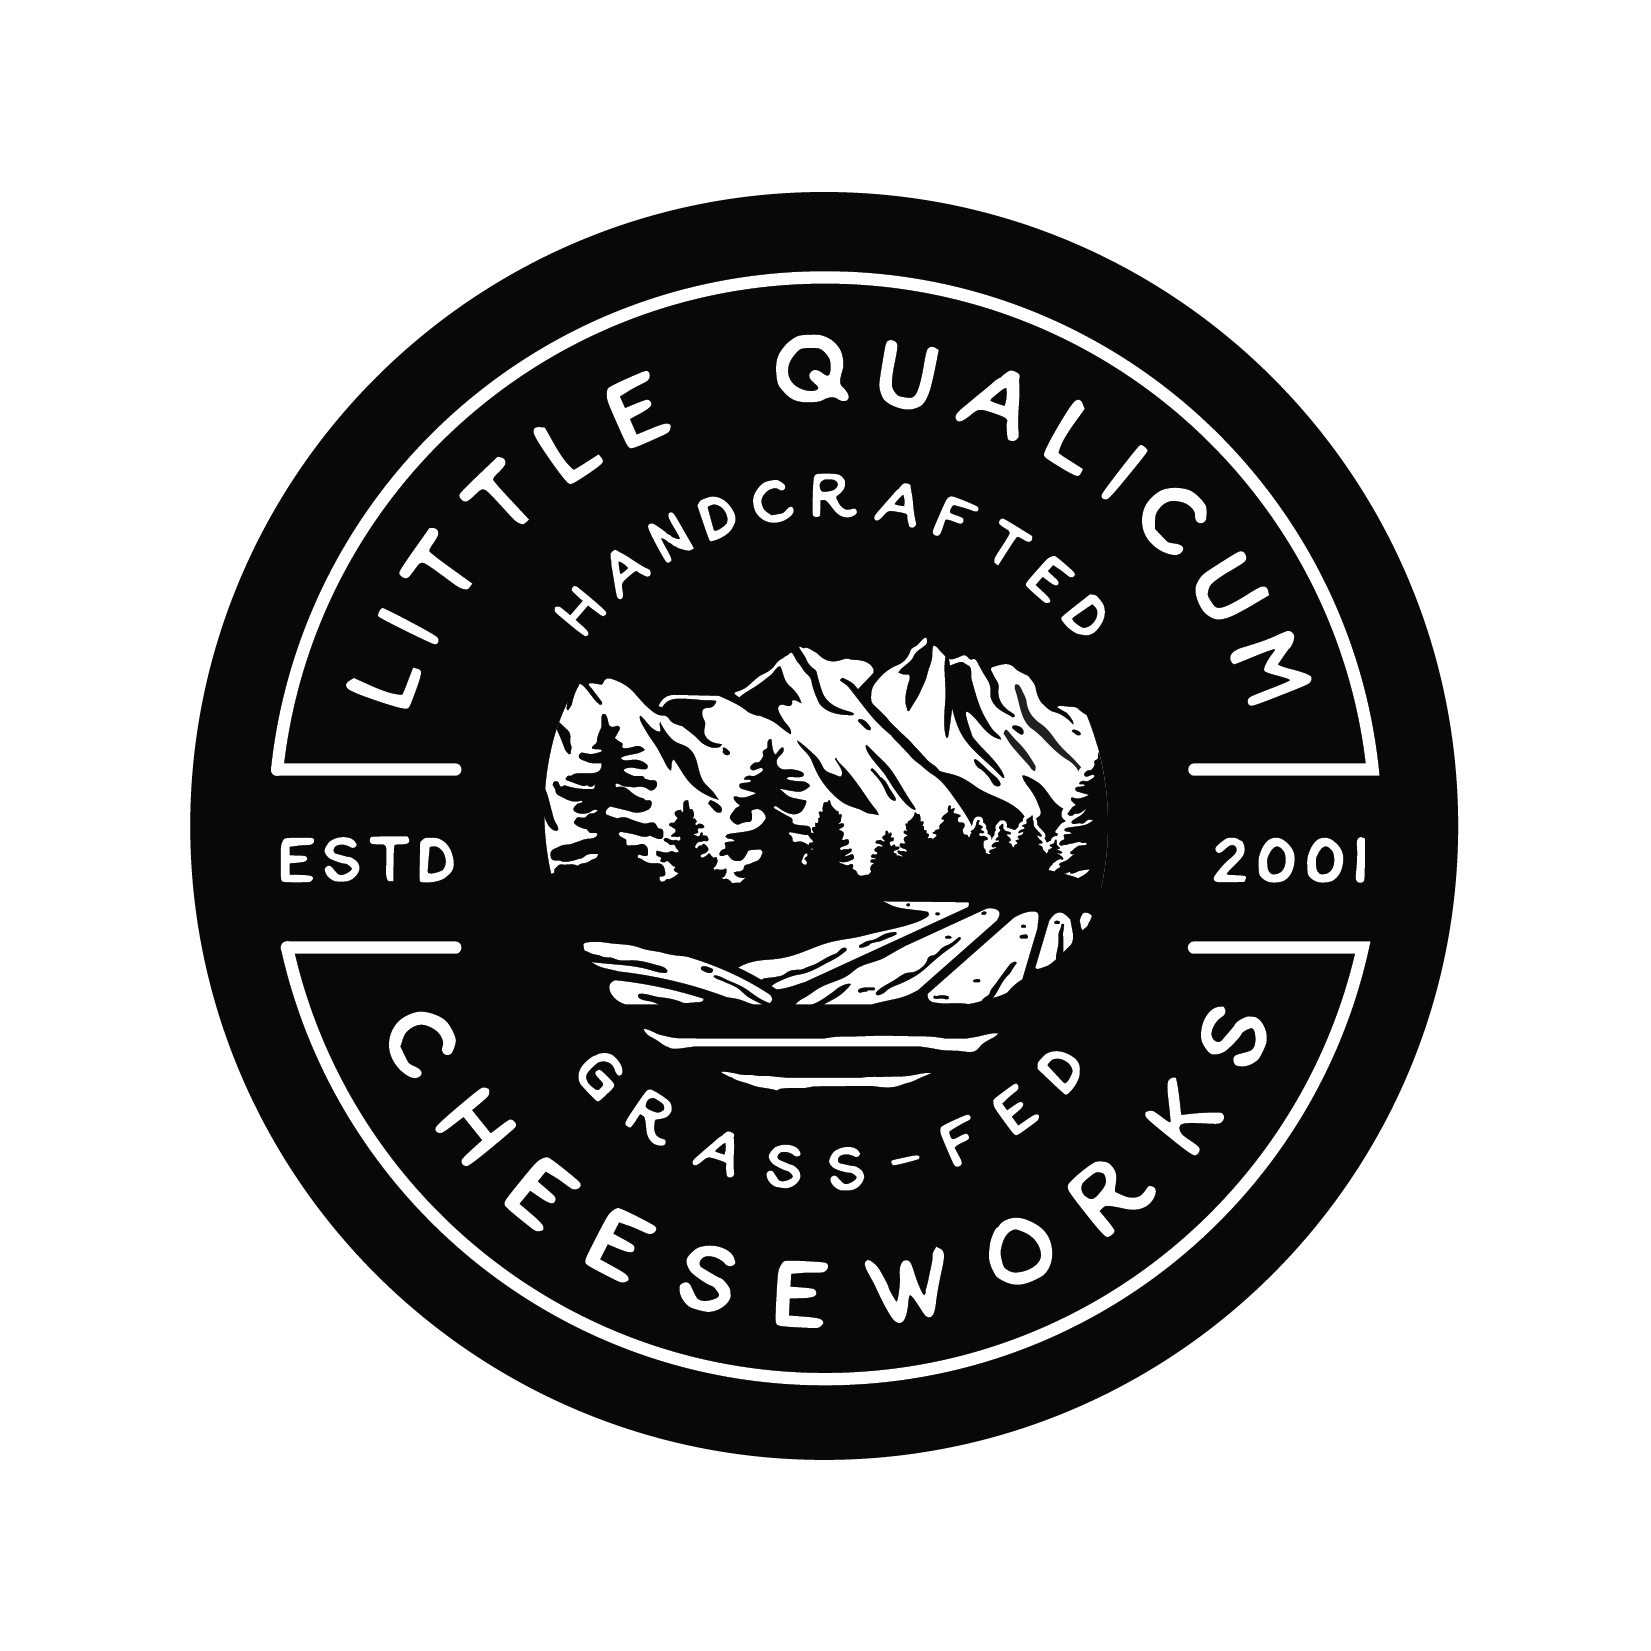 Little Qualicum Cheeseworks